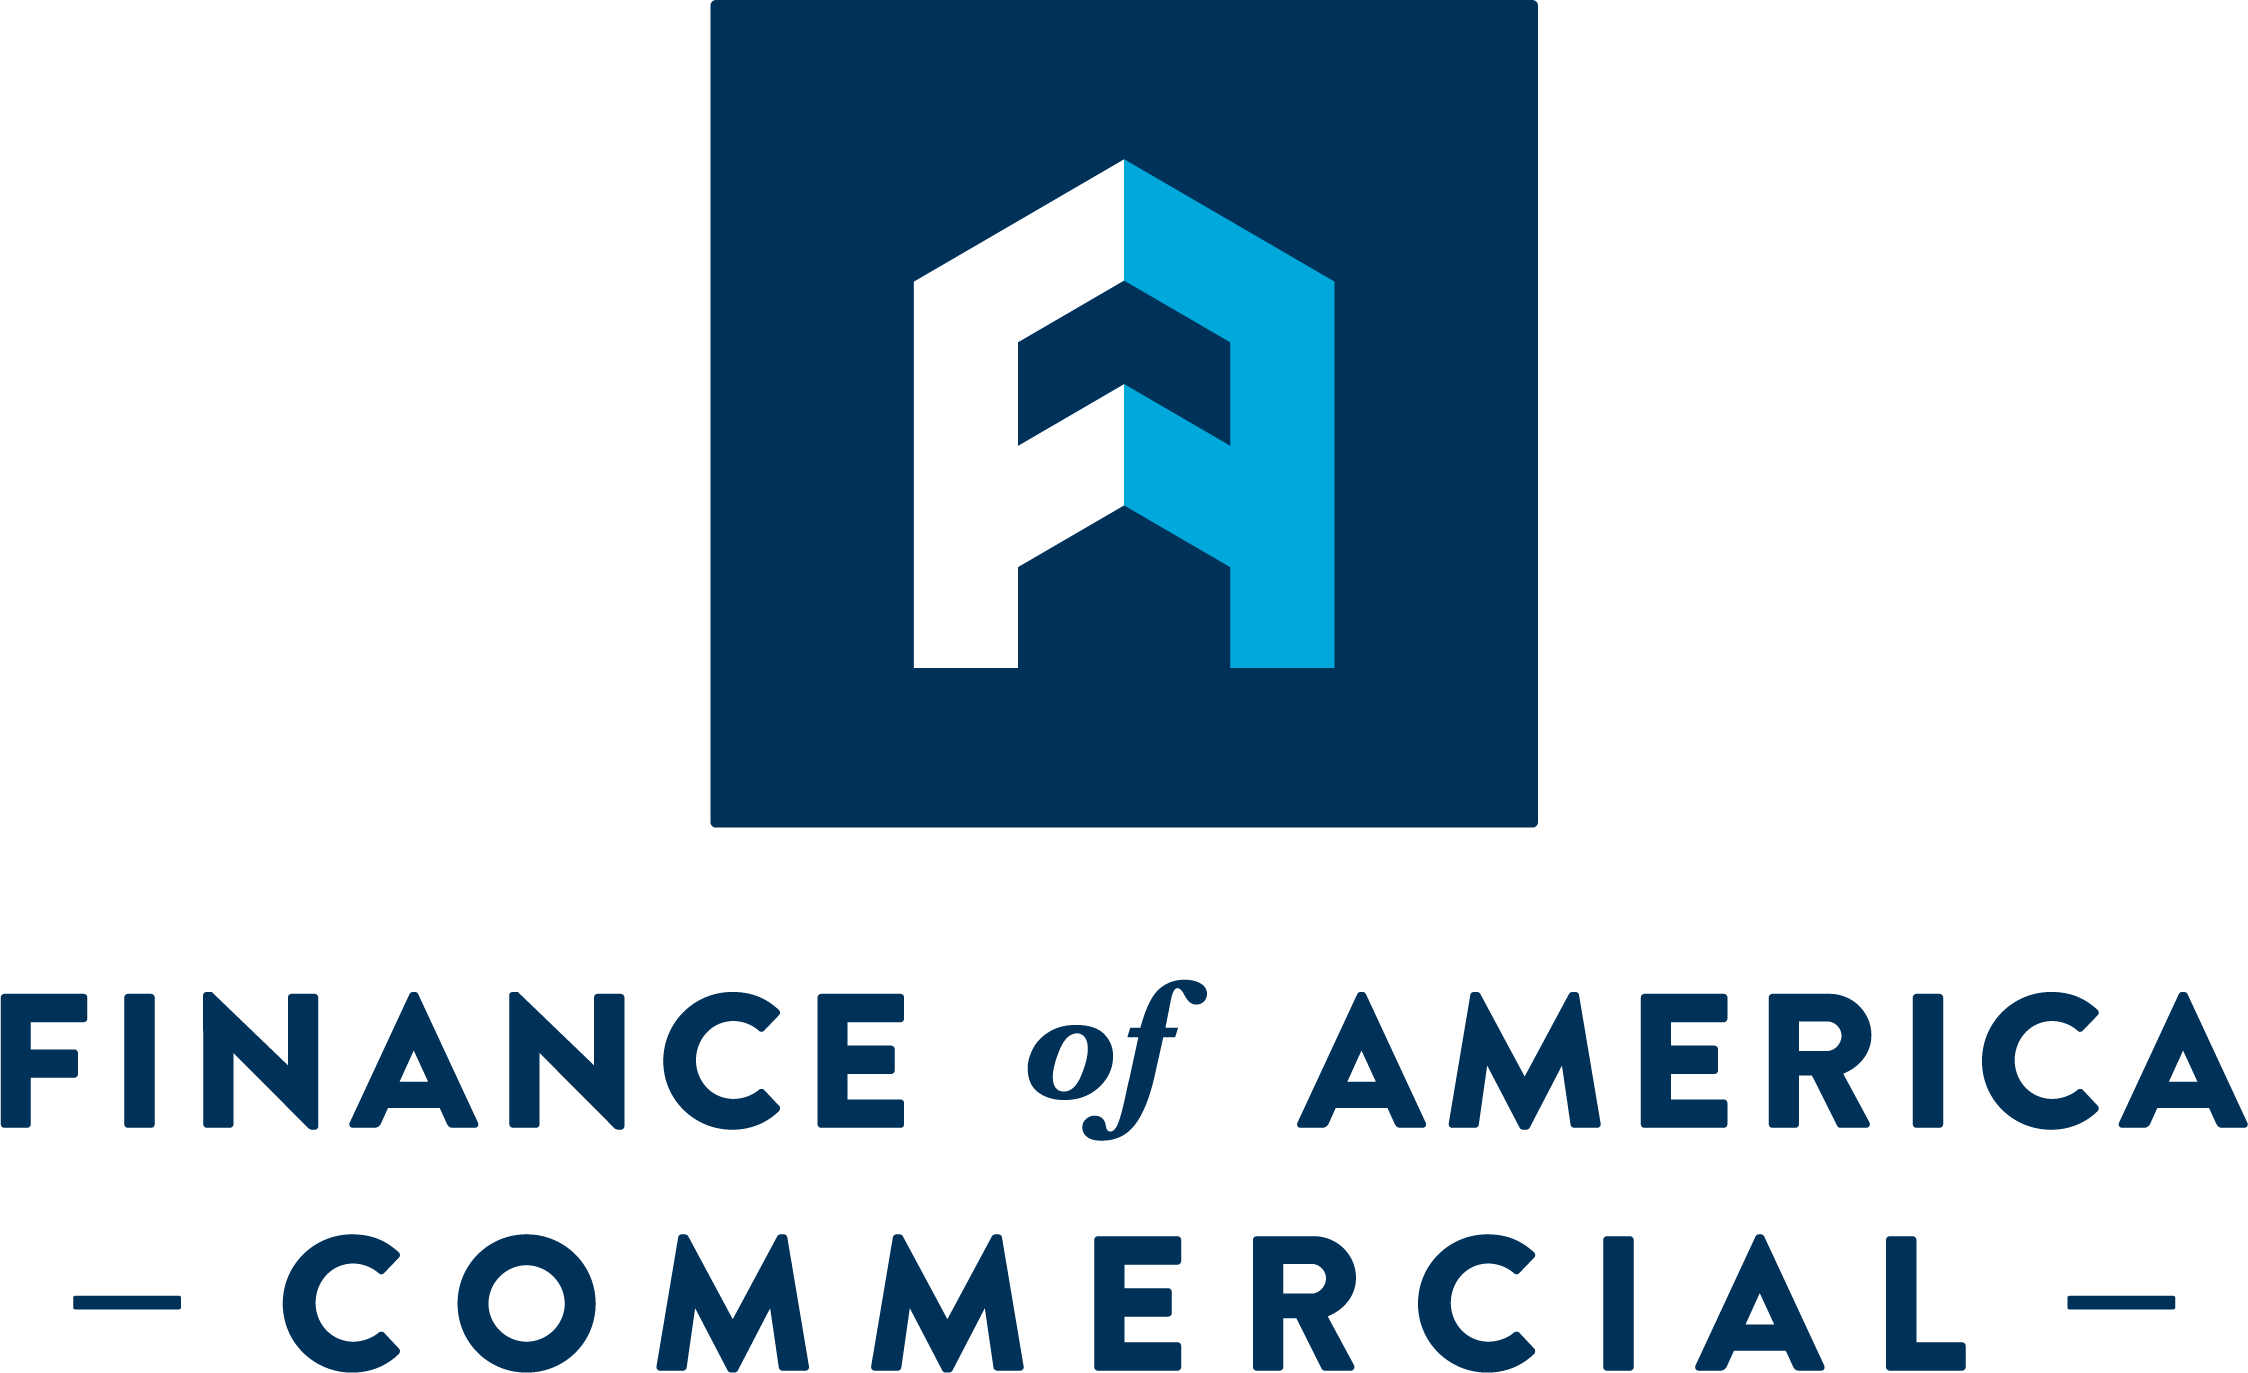 Finance of America